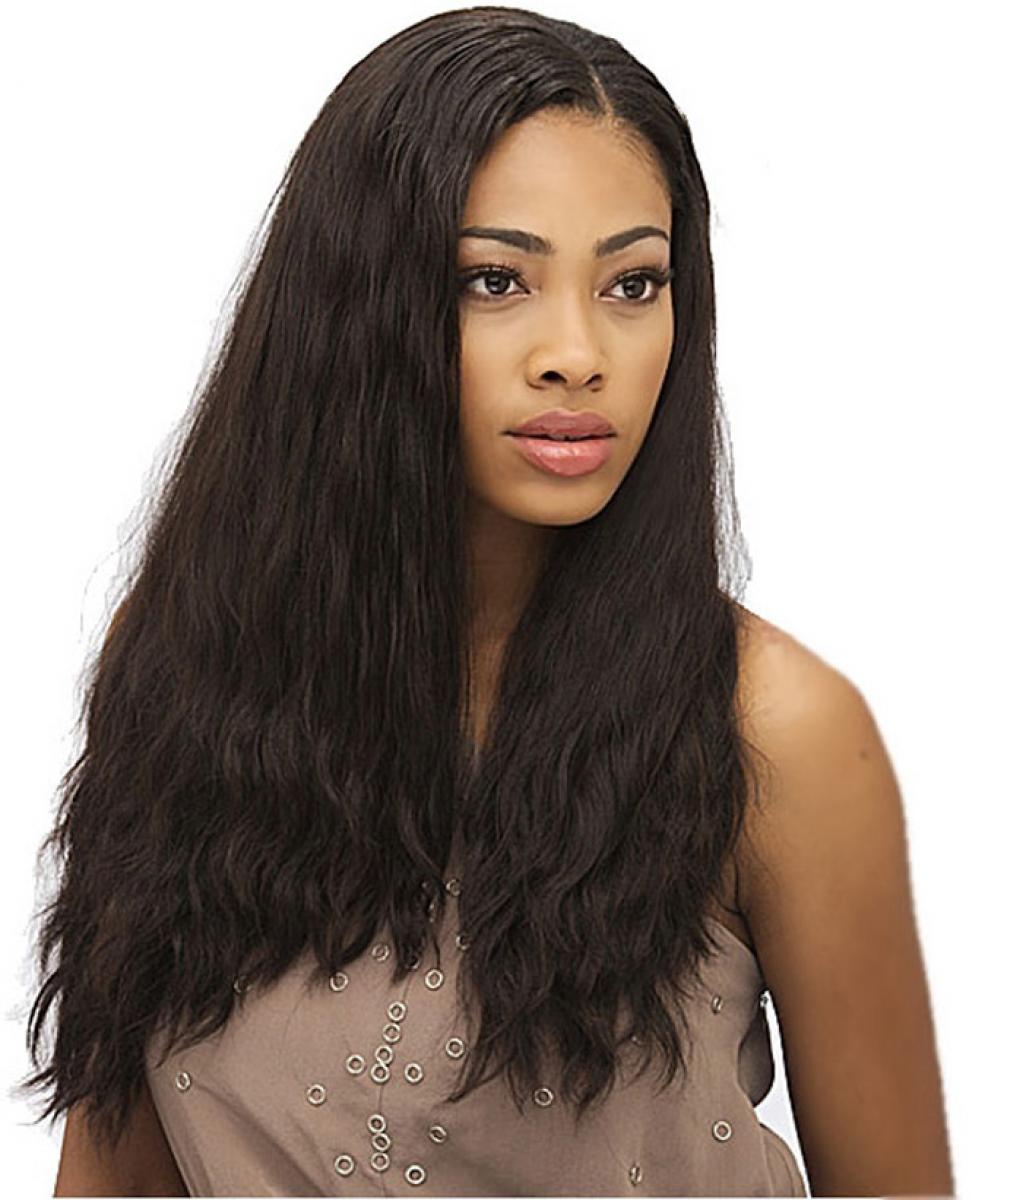 Long Black Women Hairstyles